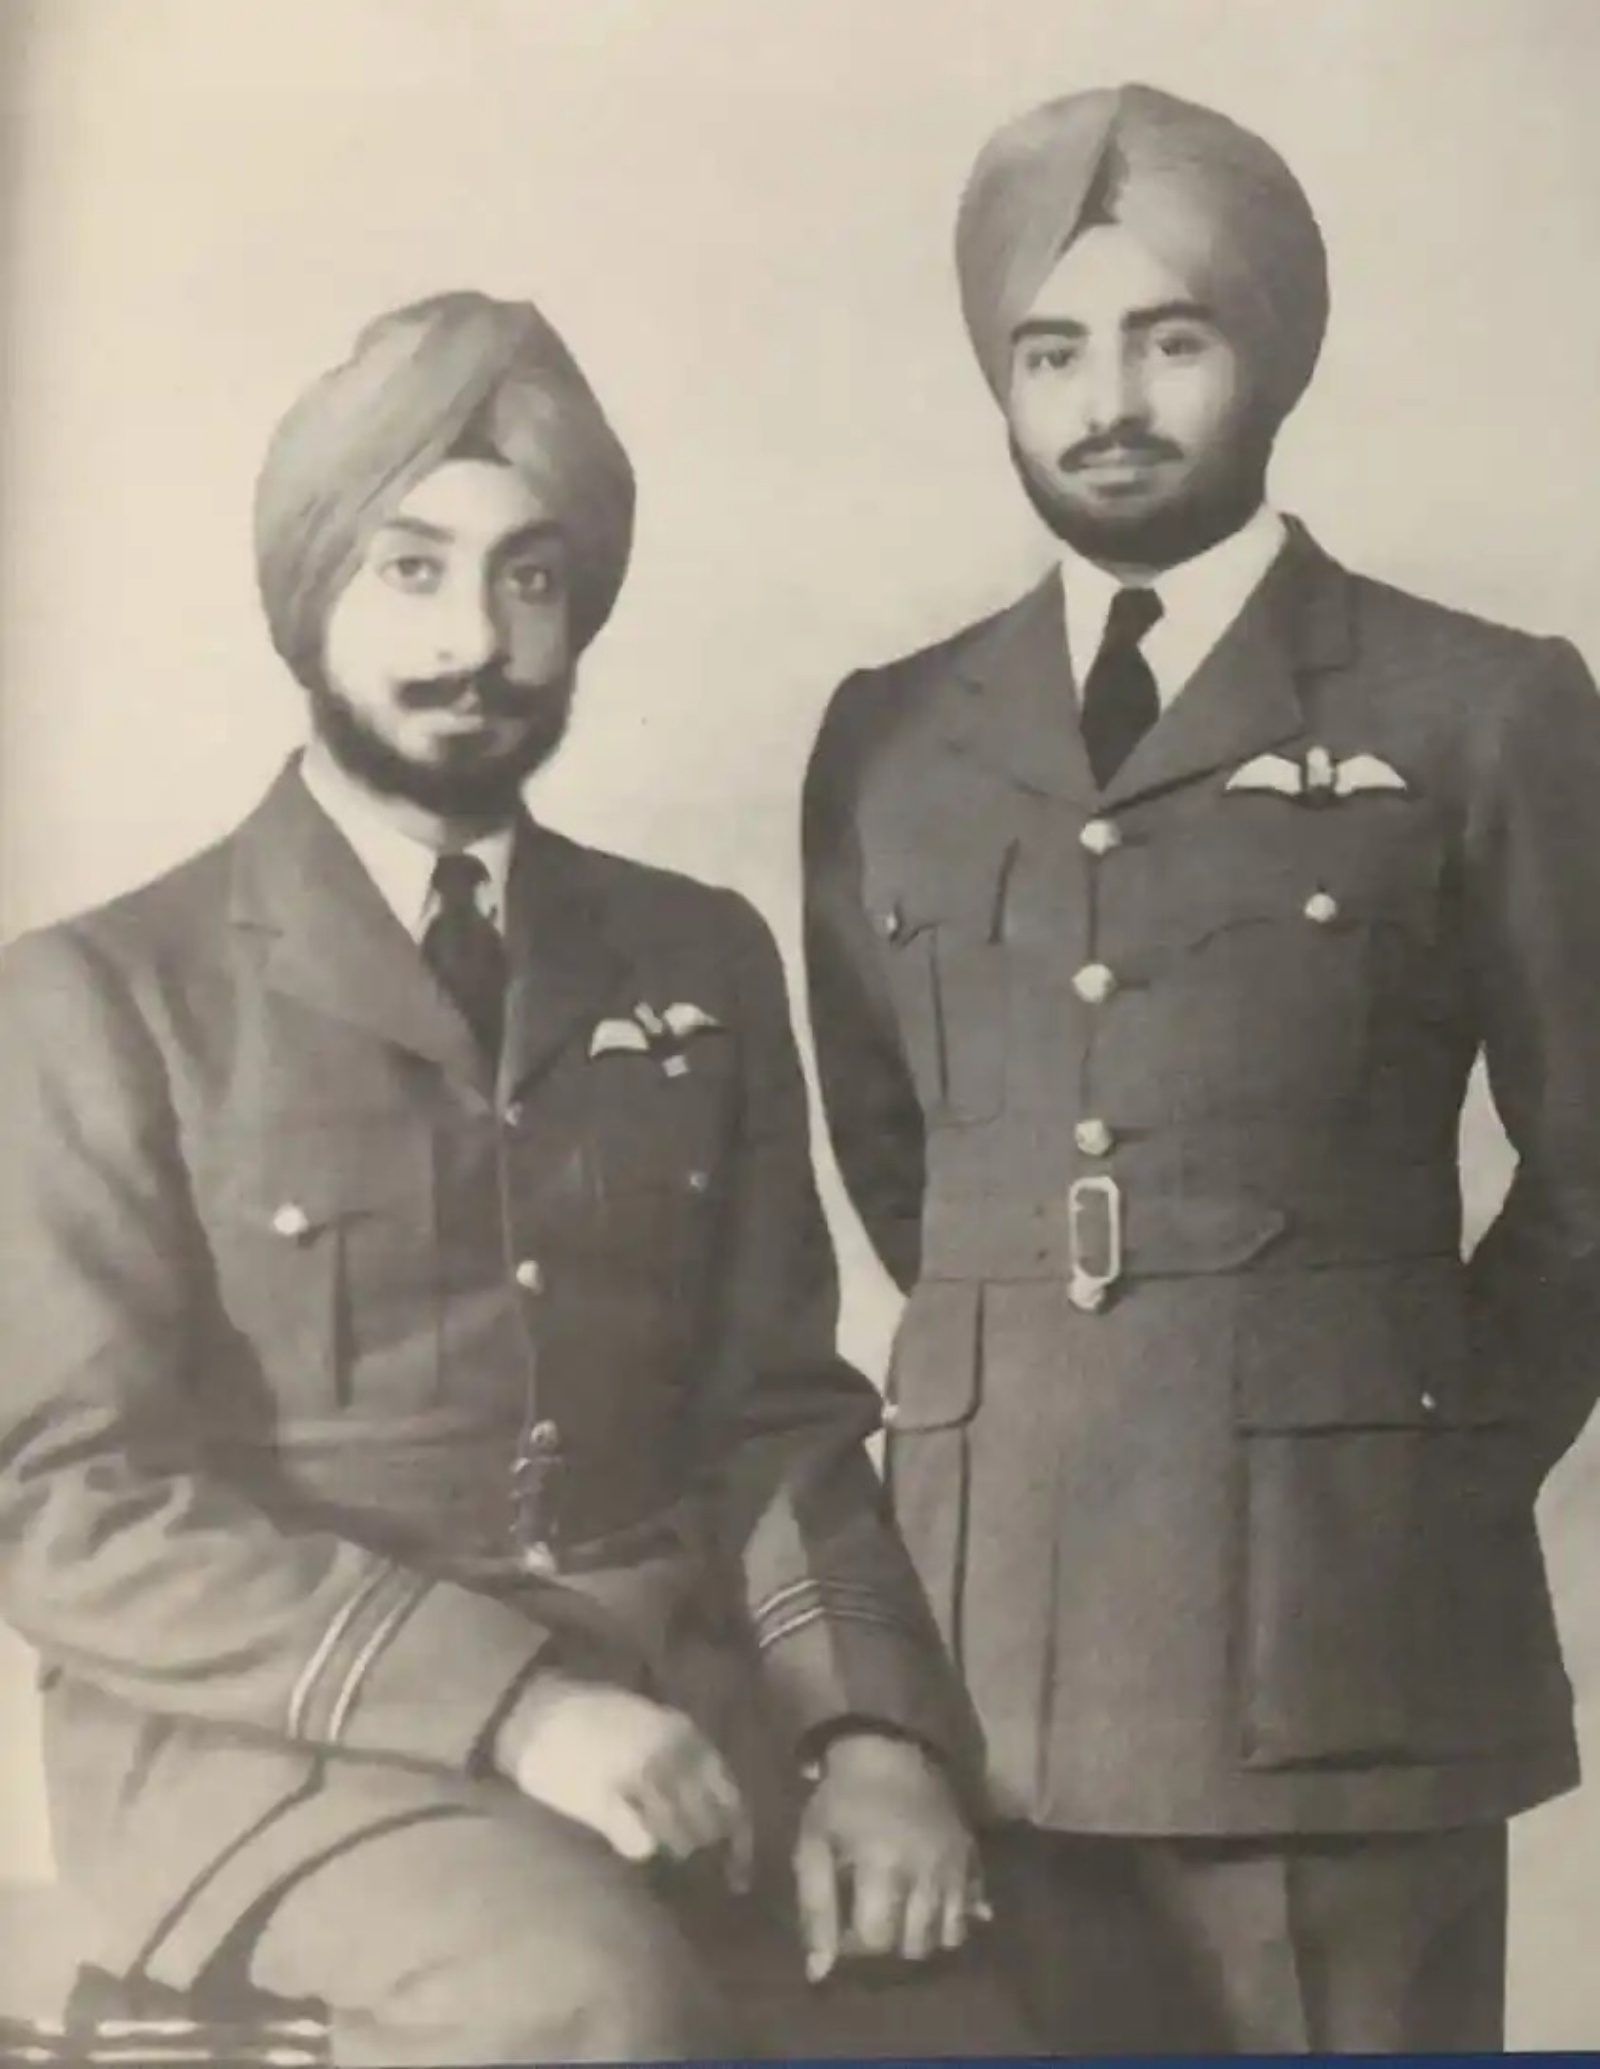 Dalip Singh Majithia with his uncle Surjeet Singh Majithia